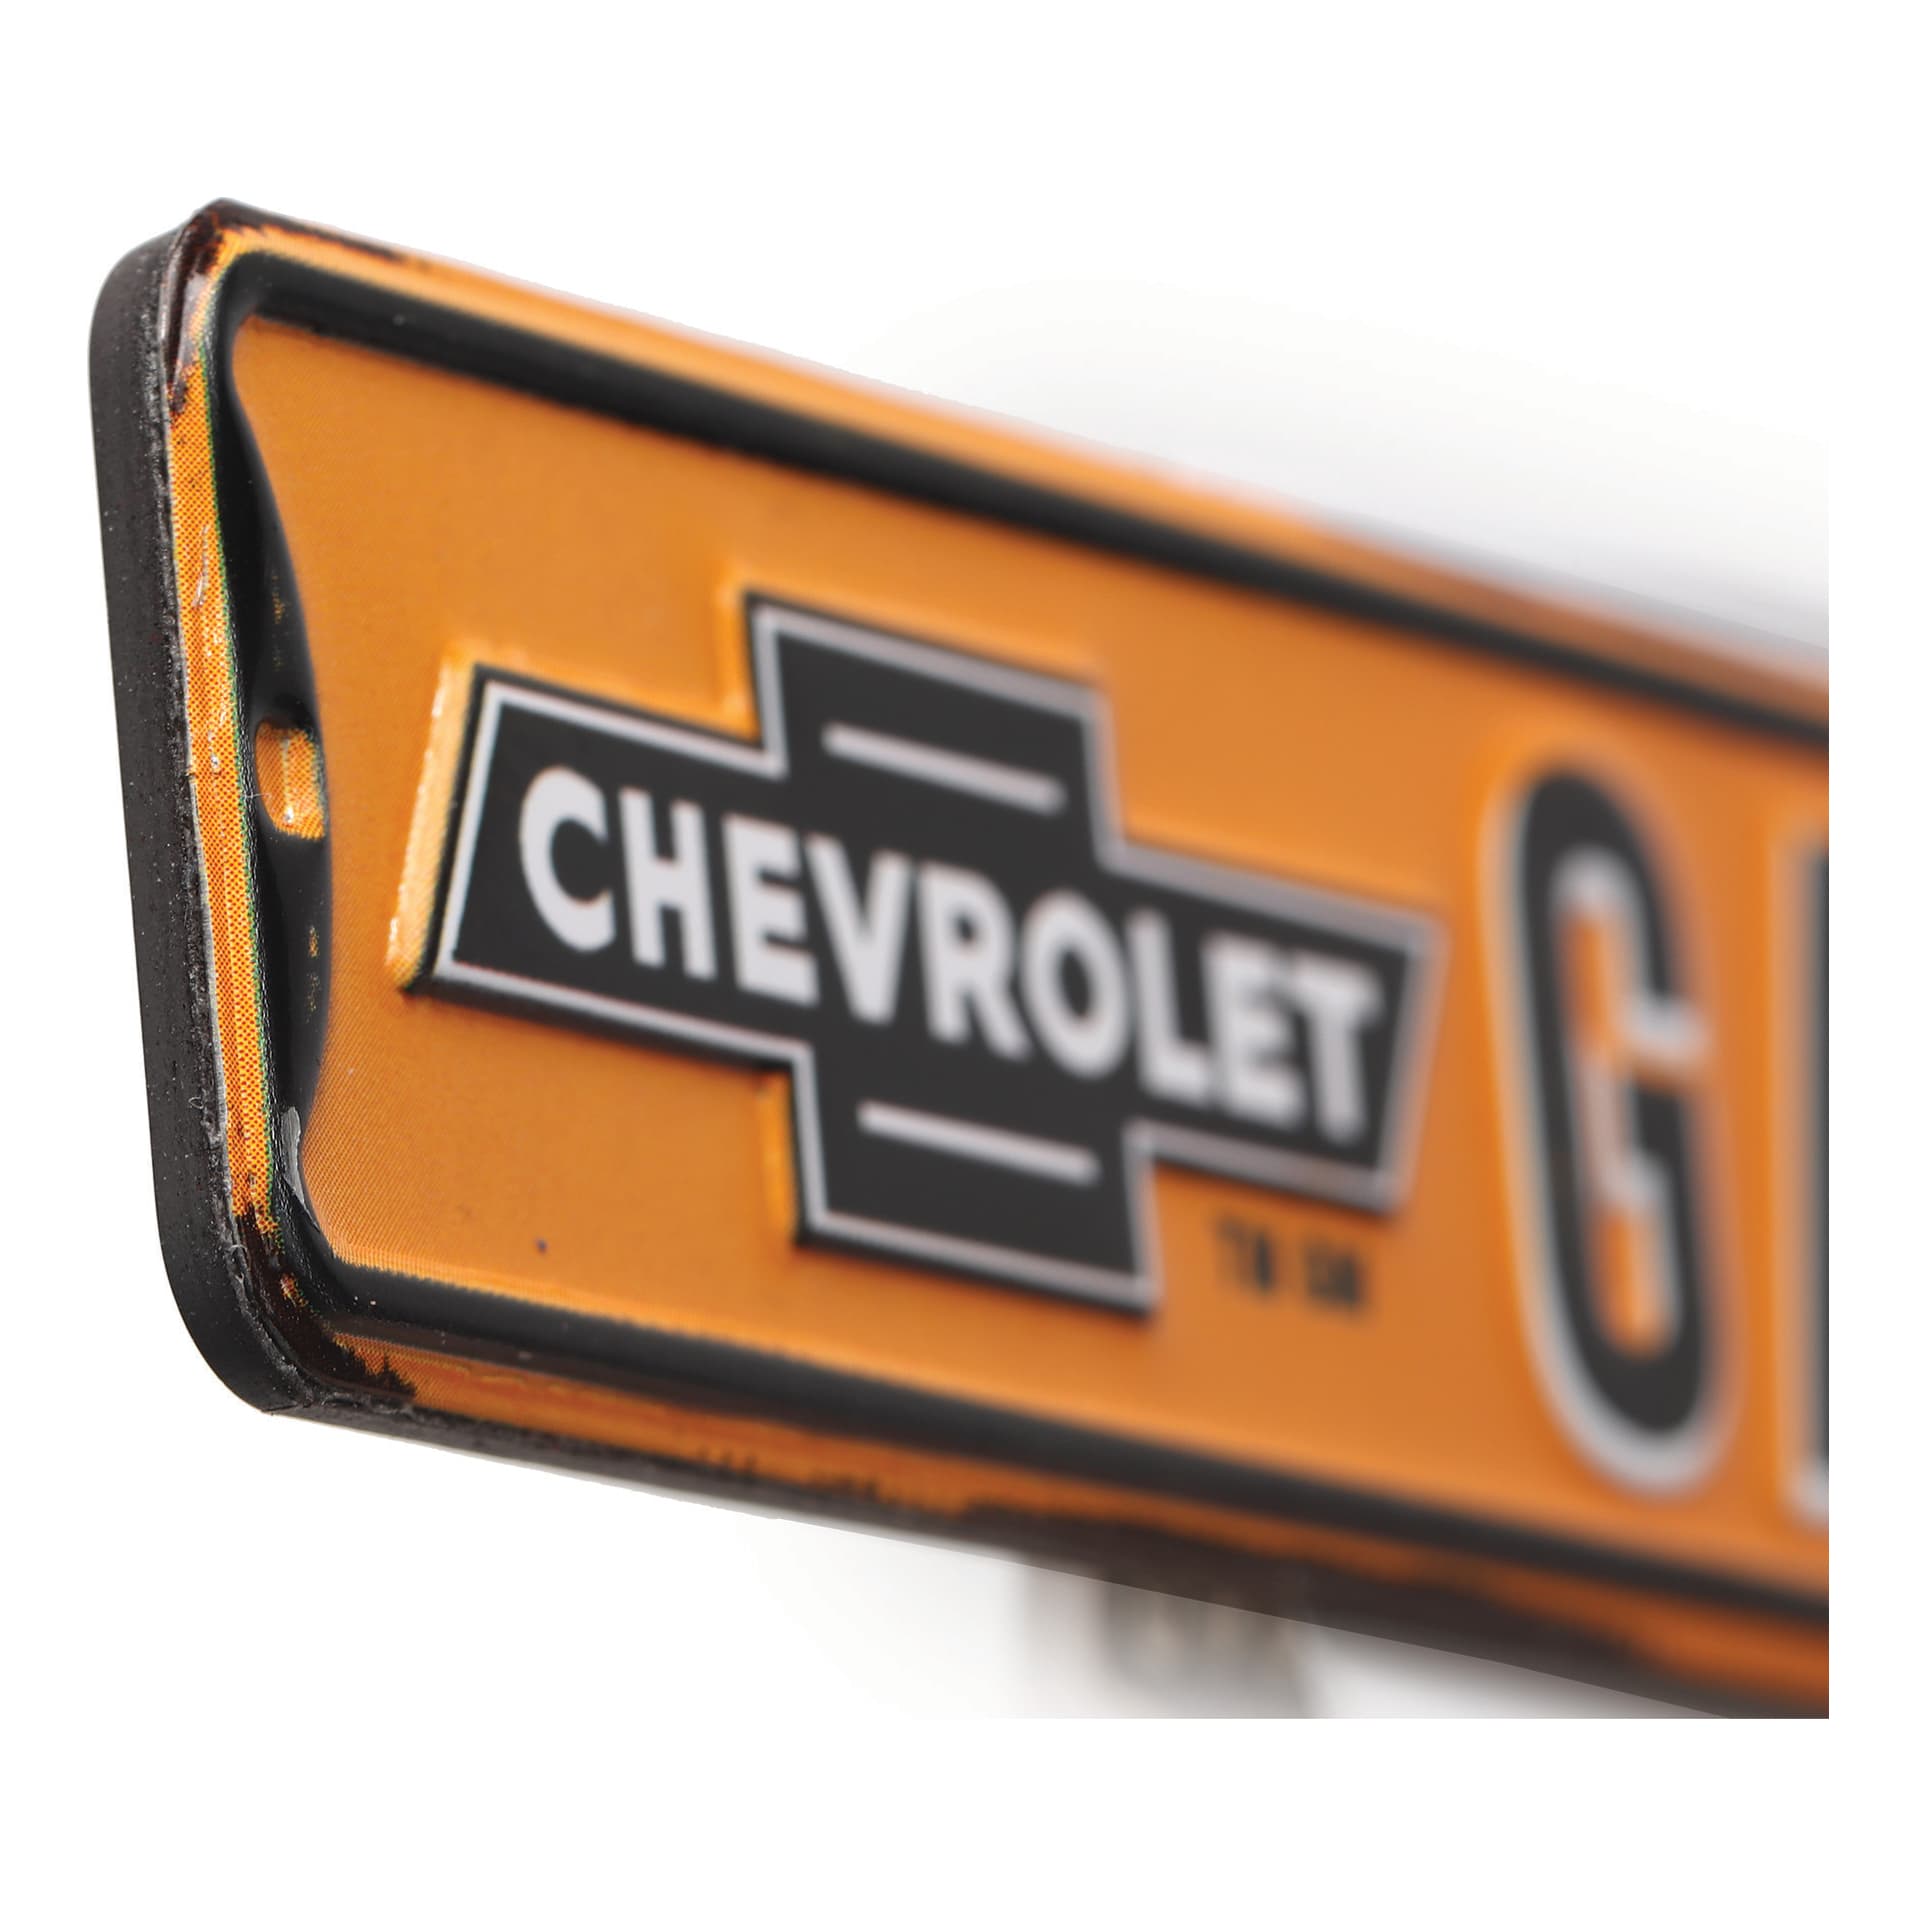 Open Roads Chevrolet Garage Street Sign Magnet